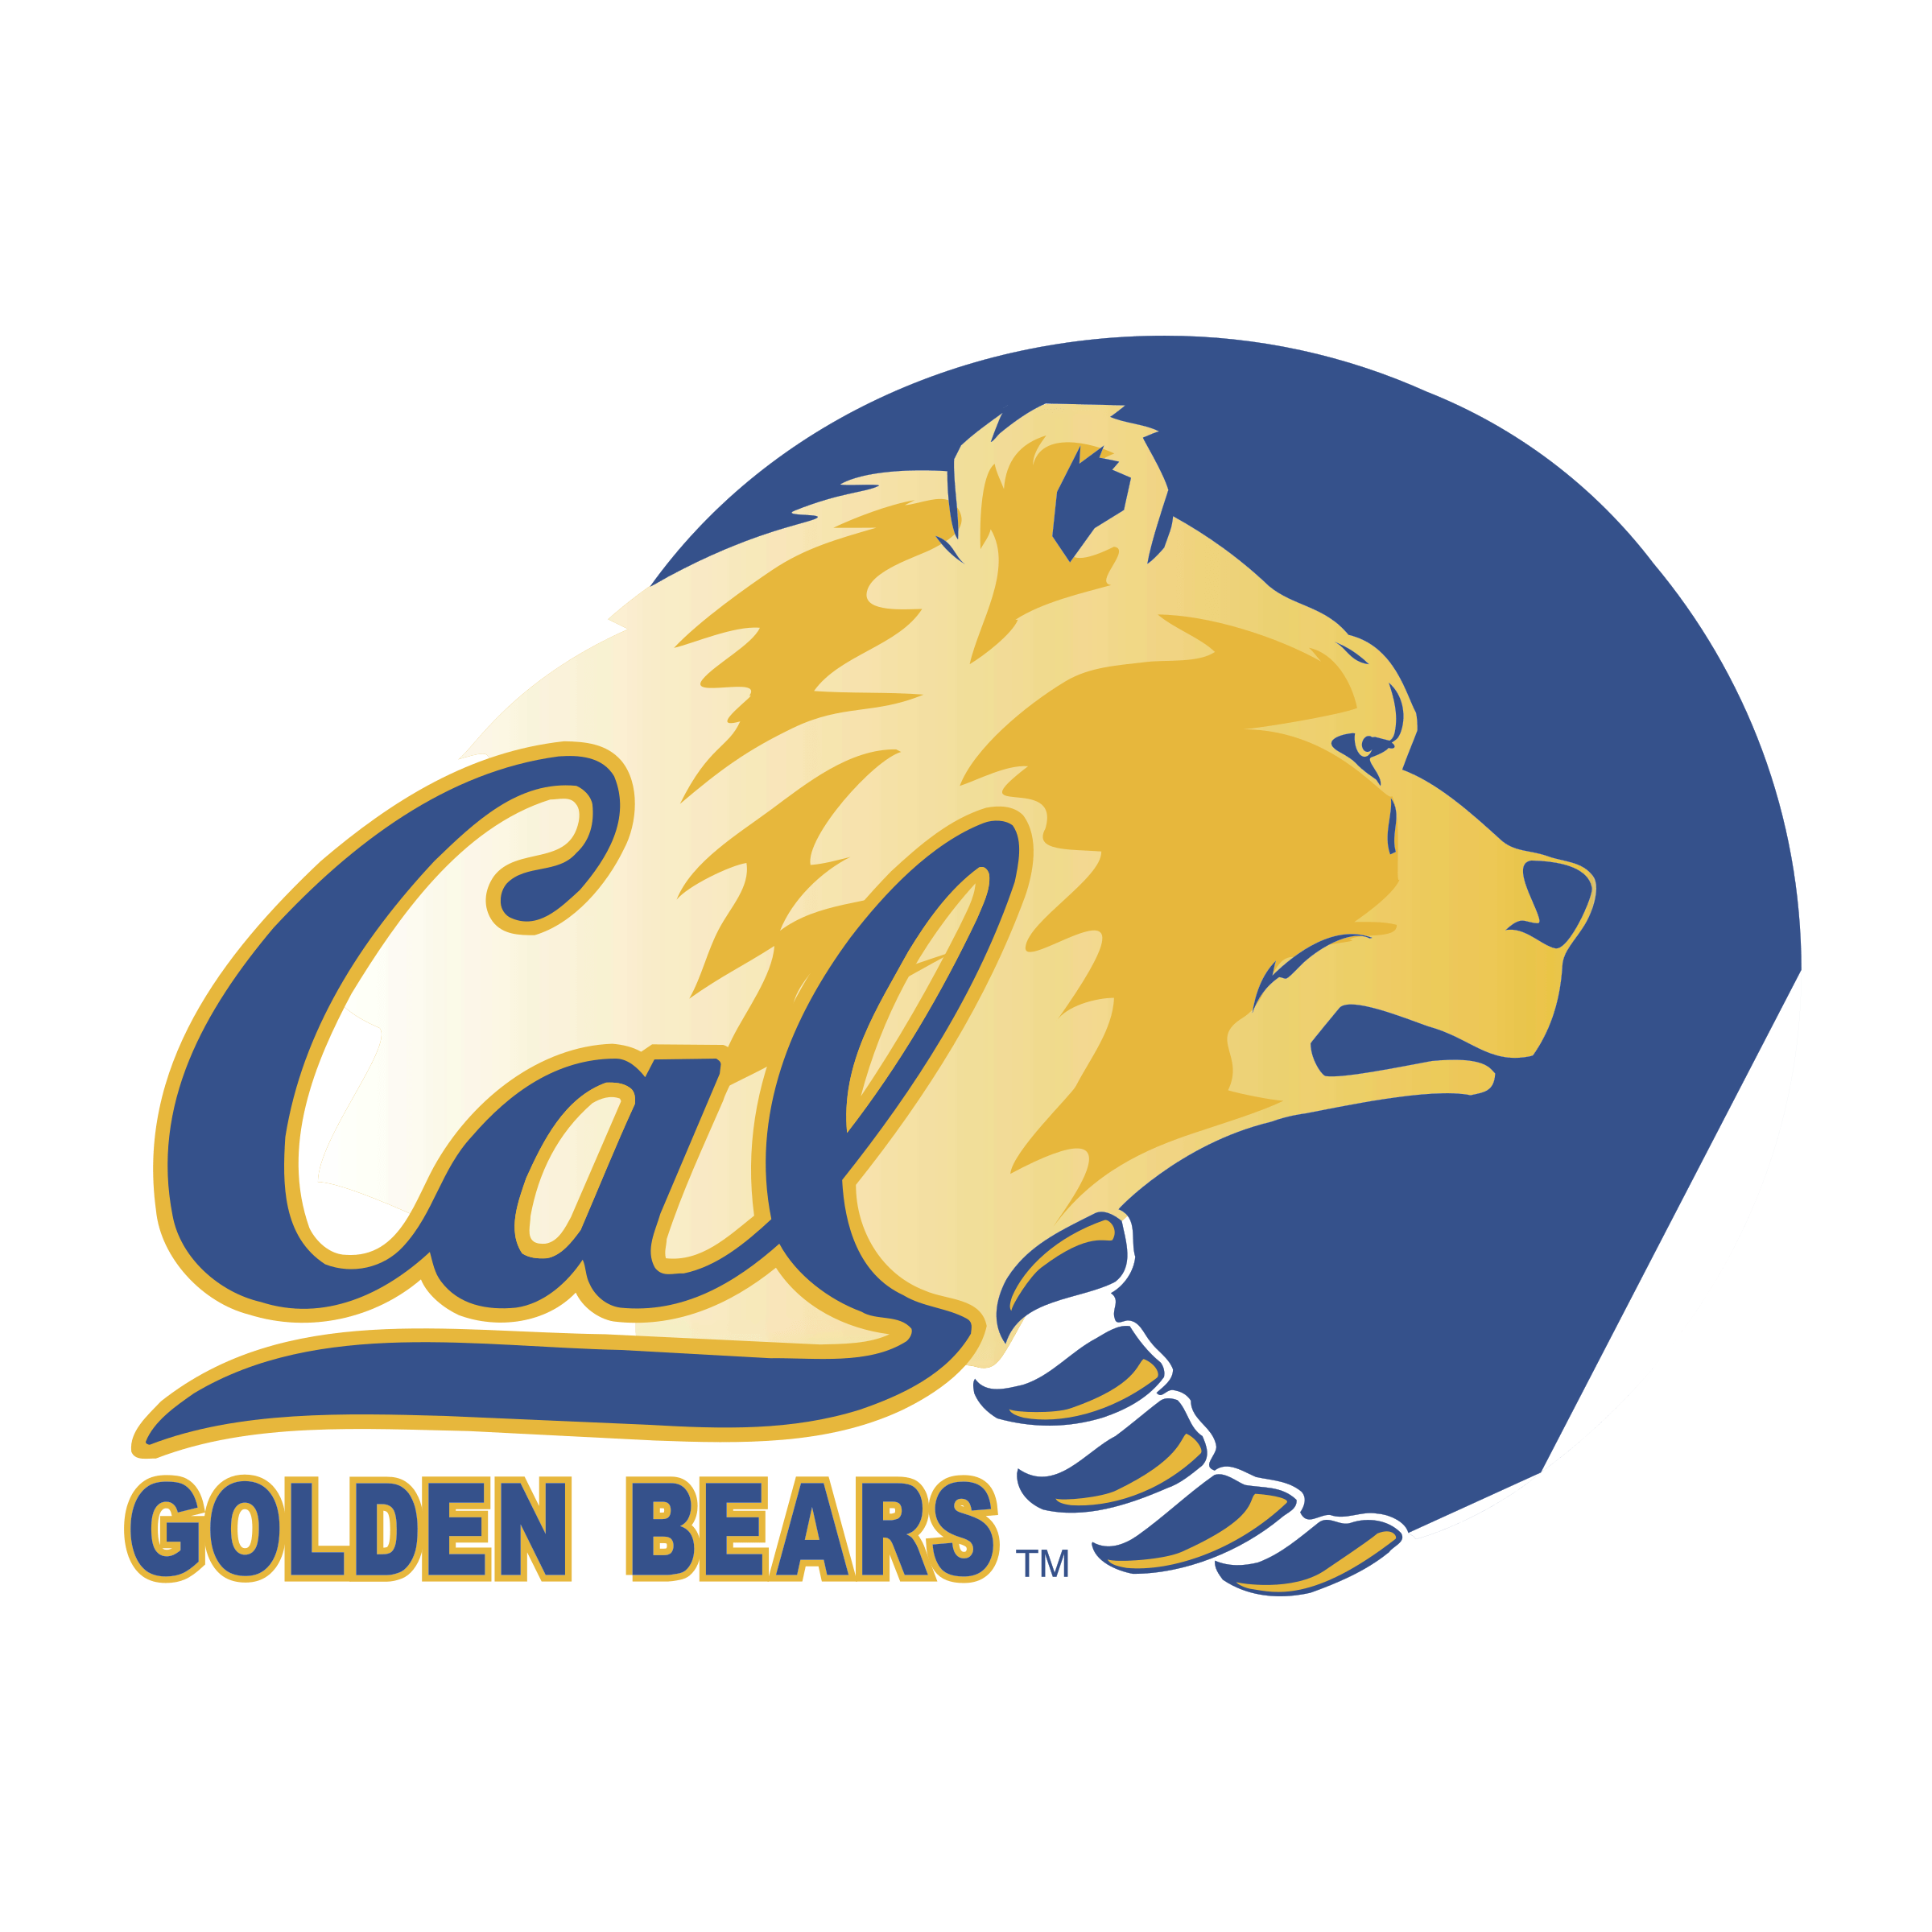 Cal Logo - Cal Golden Bears Logo PNG Transparent & SVG Vector - Freebie Supply